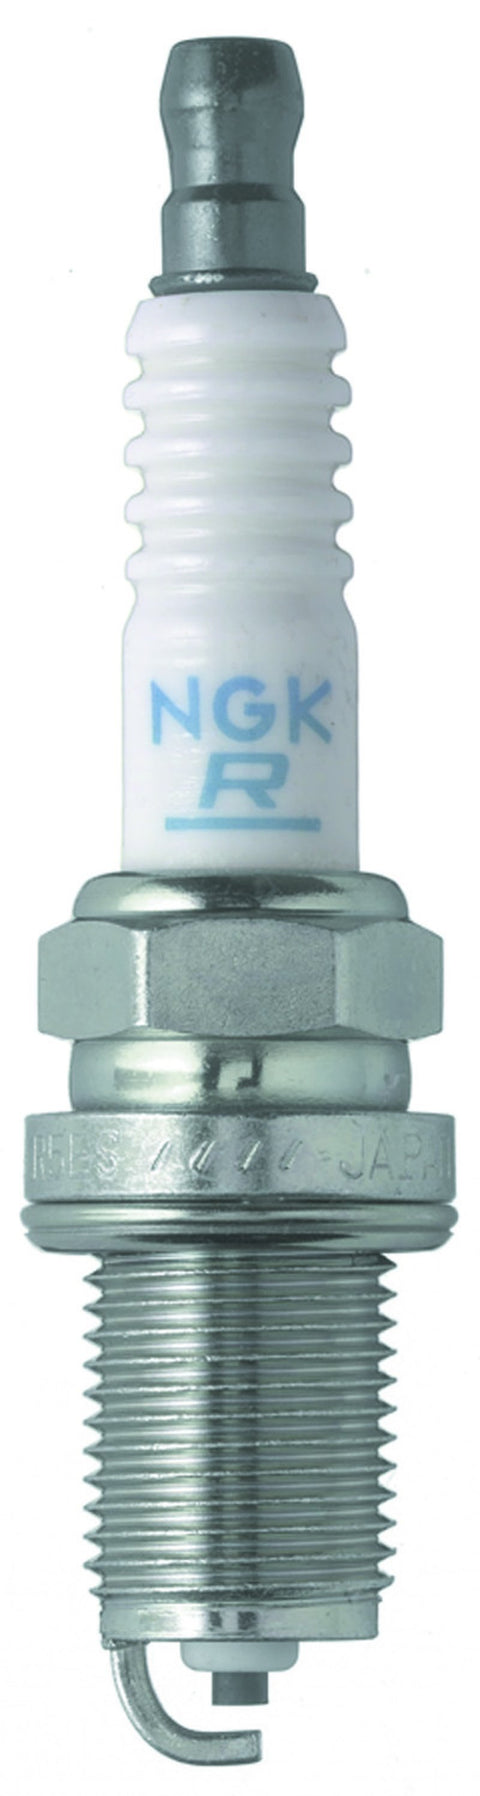 NGK V-Power Spark Plug Box of 4 (2441)